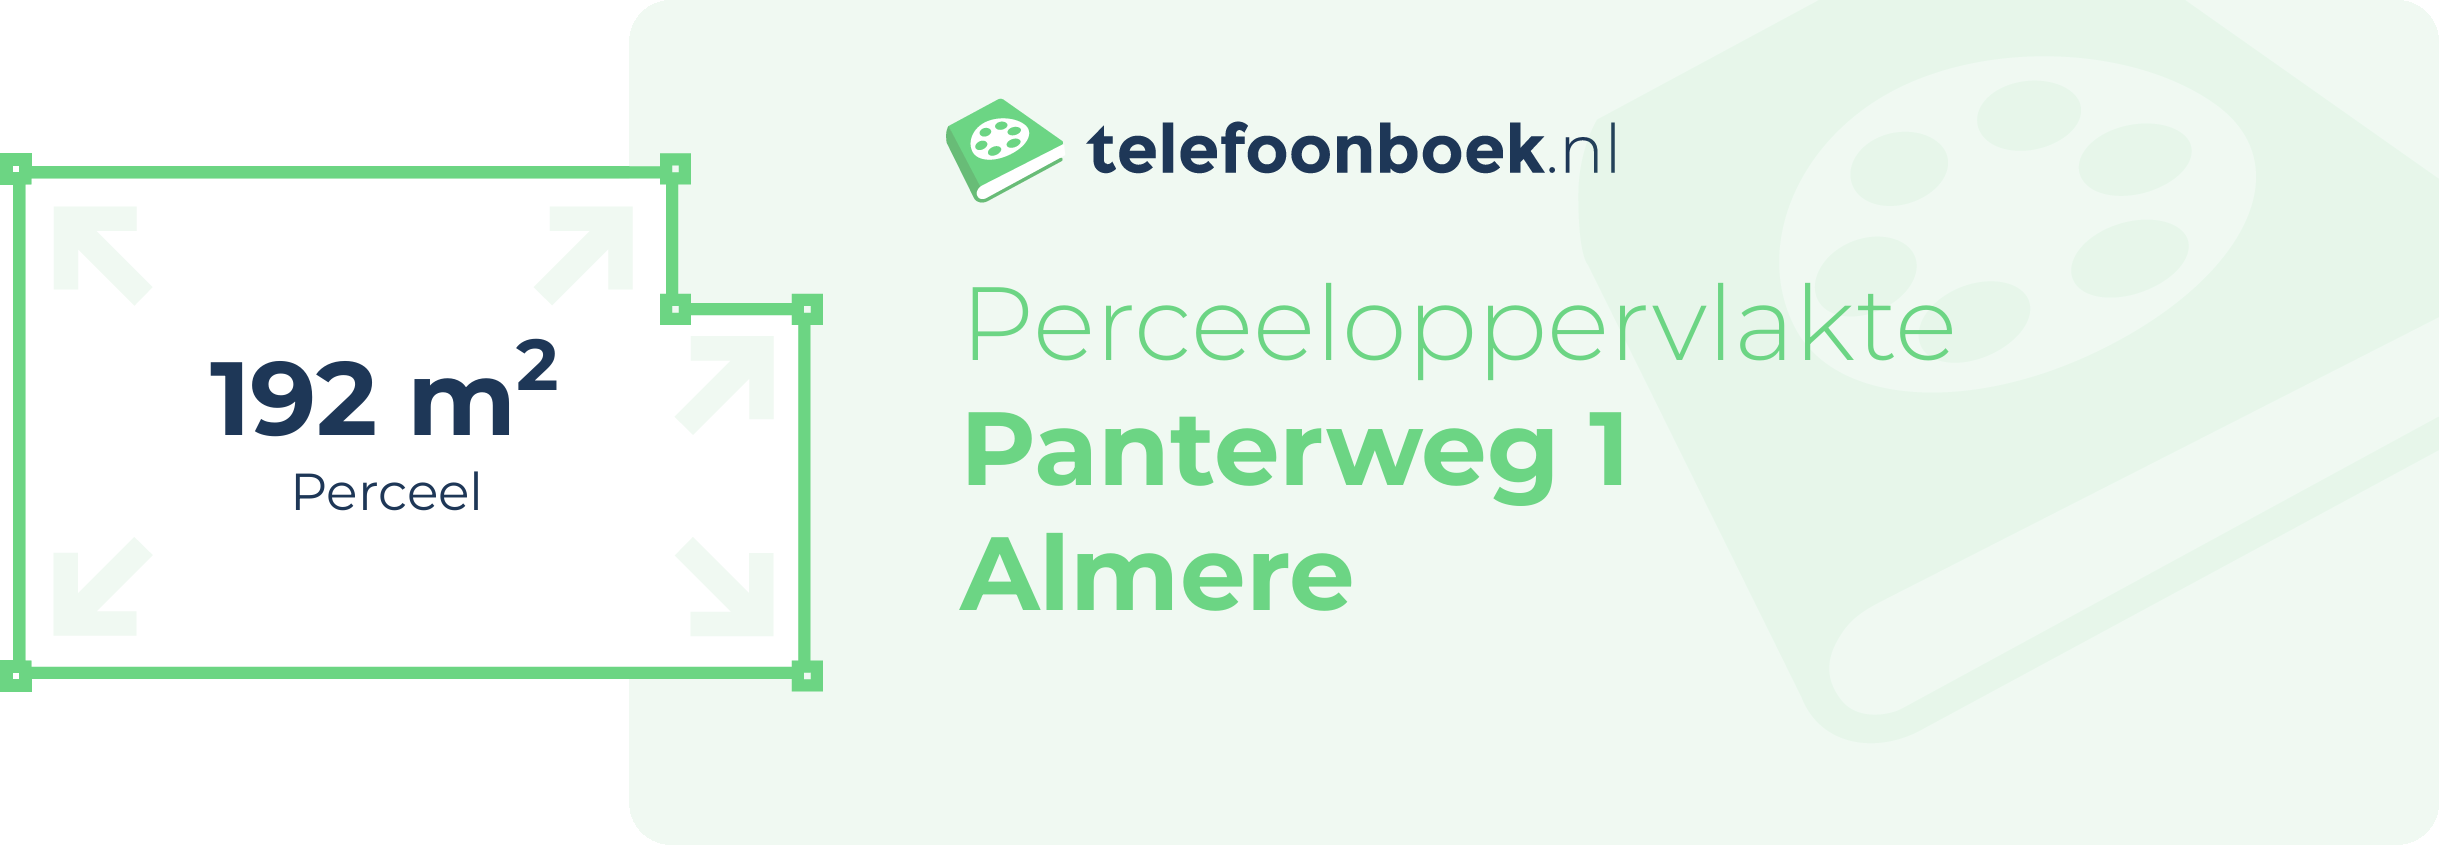 Perceeloppervlakte Panterweg 1 Almere